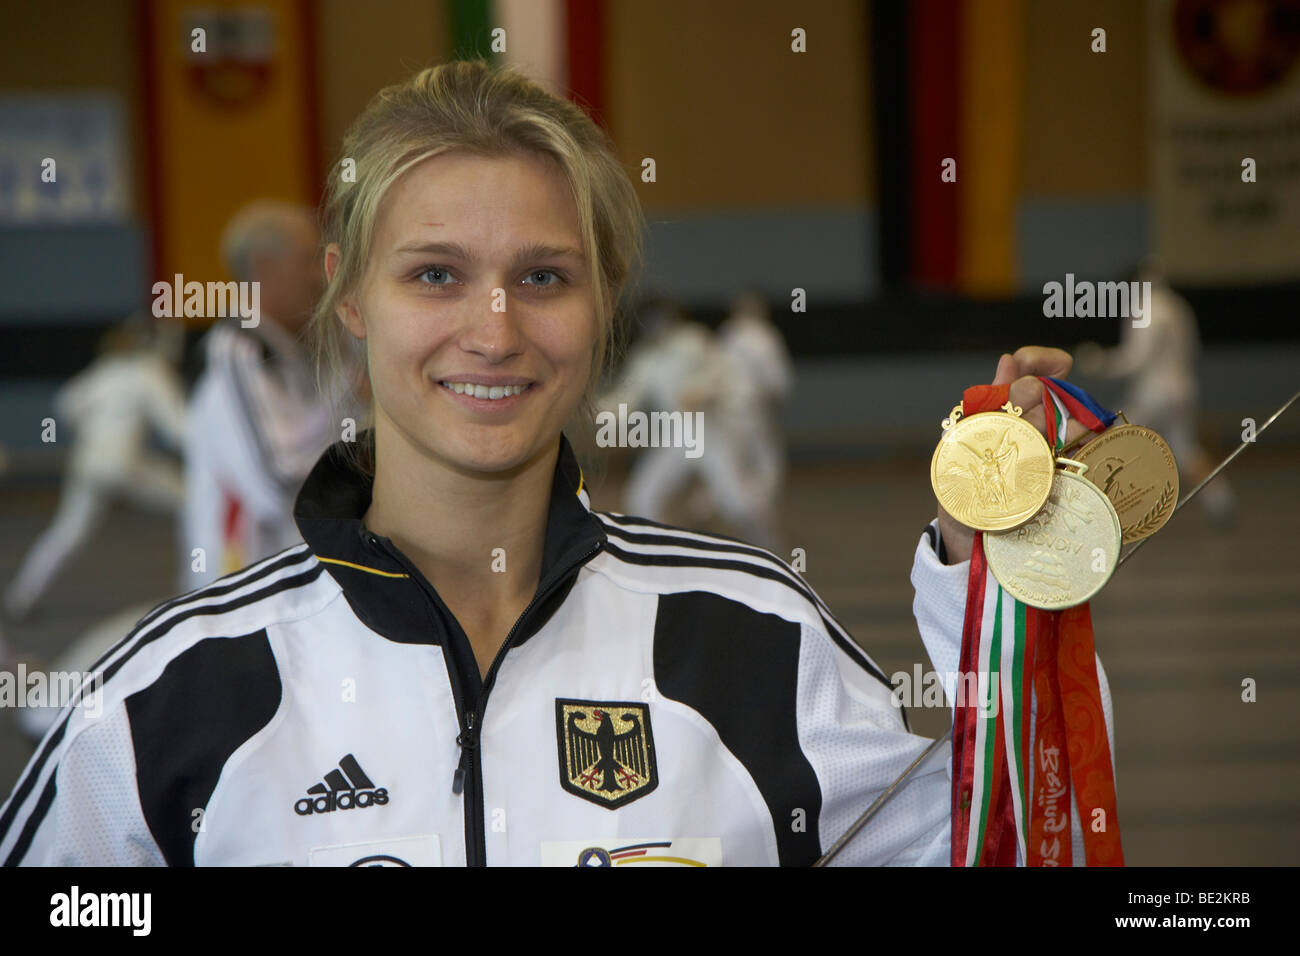 Epee fencer Britta Heidemann, TSV Bayer 04 Leverkusen, showing her gold medals, Bonn, North Rhine-Westphalia, Germany, Europe Stock Photo